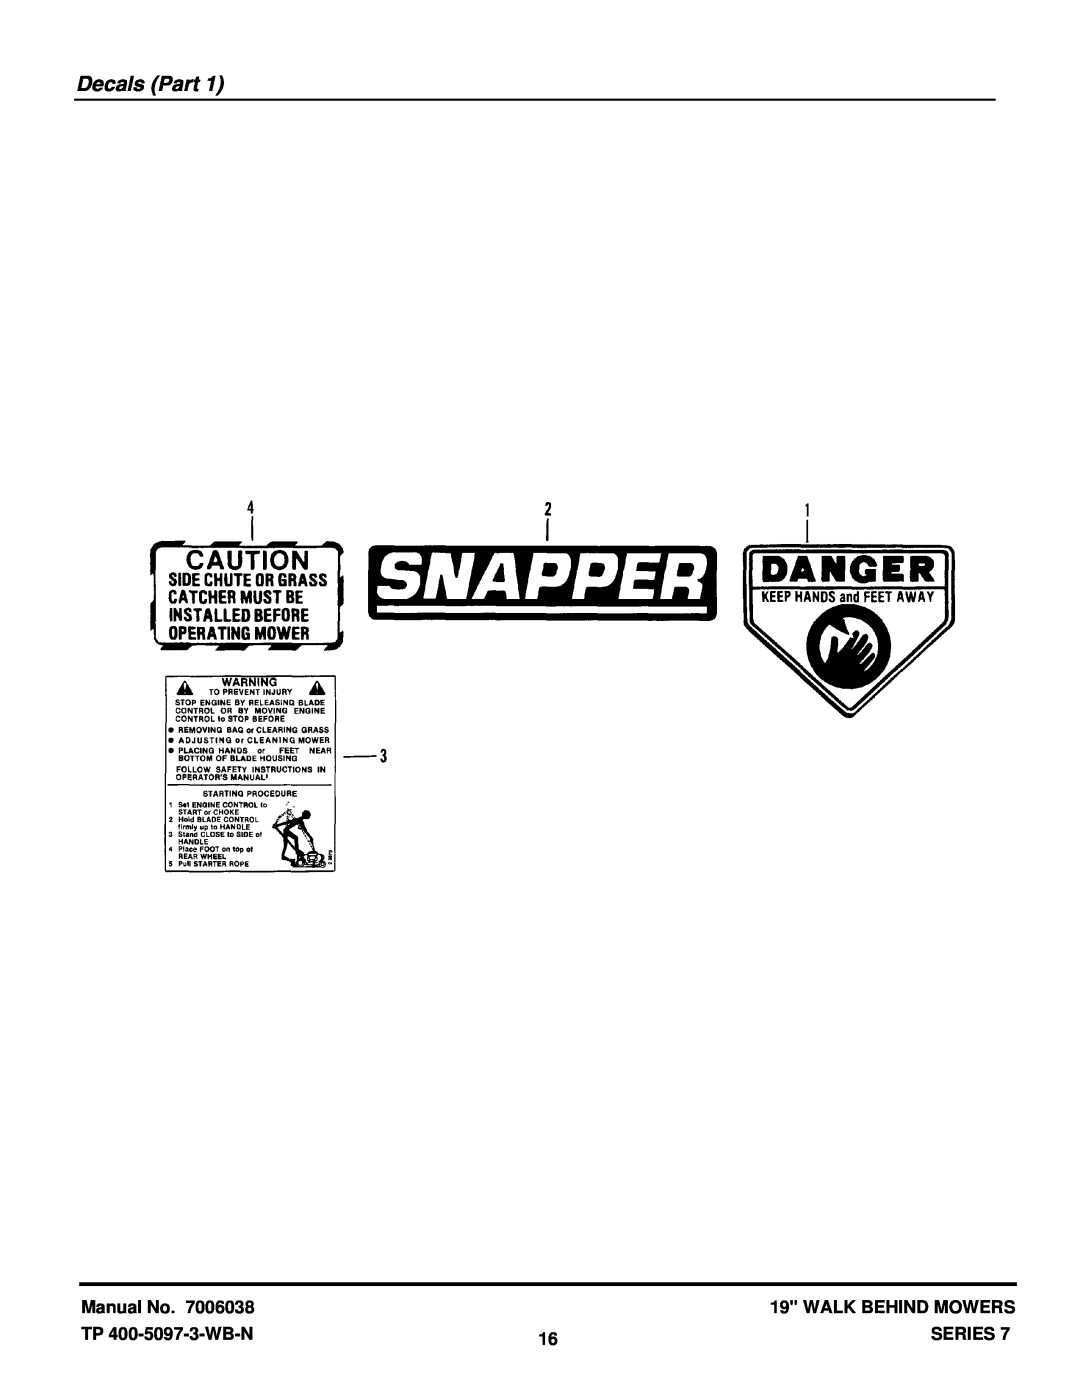 Snapper 19307T-2, D19357B, DLW307T-2, DLW357B, G19357B Decals Part, Manual No, Walk Behind Mowers, TP 400-5097-3-WB-N, Series 